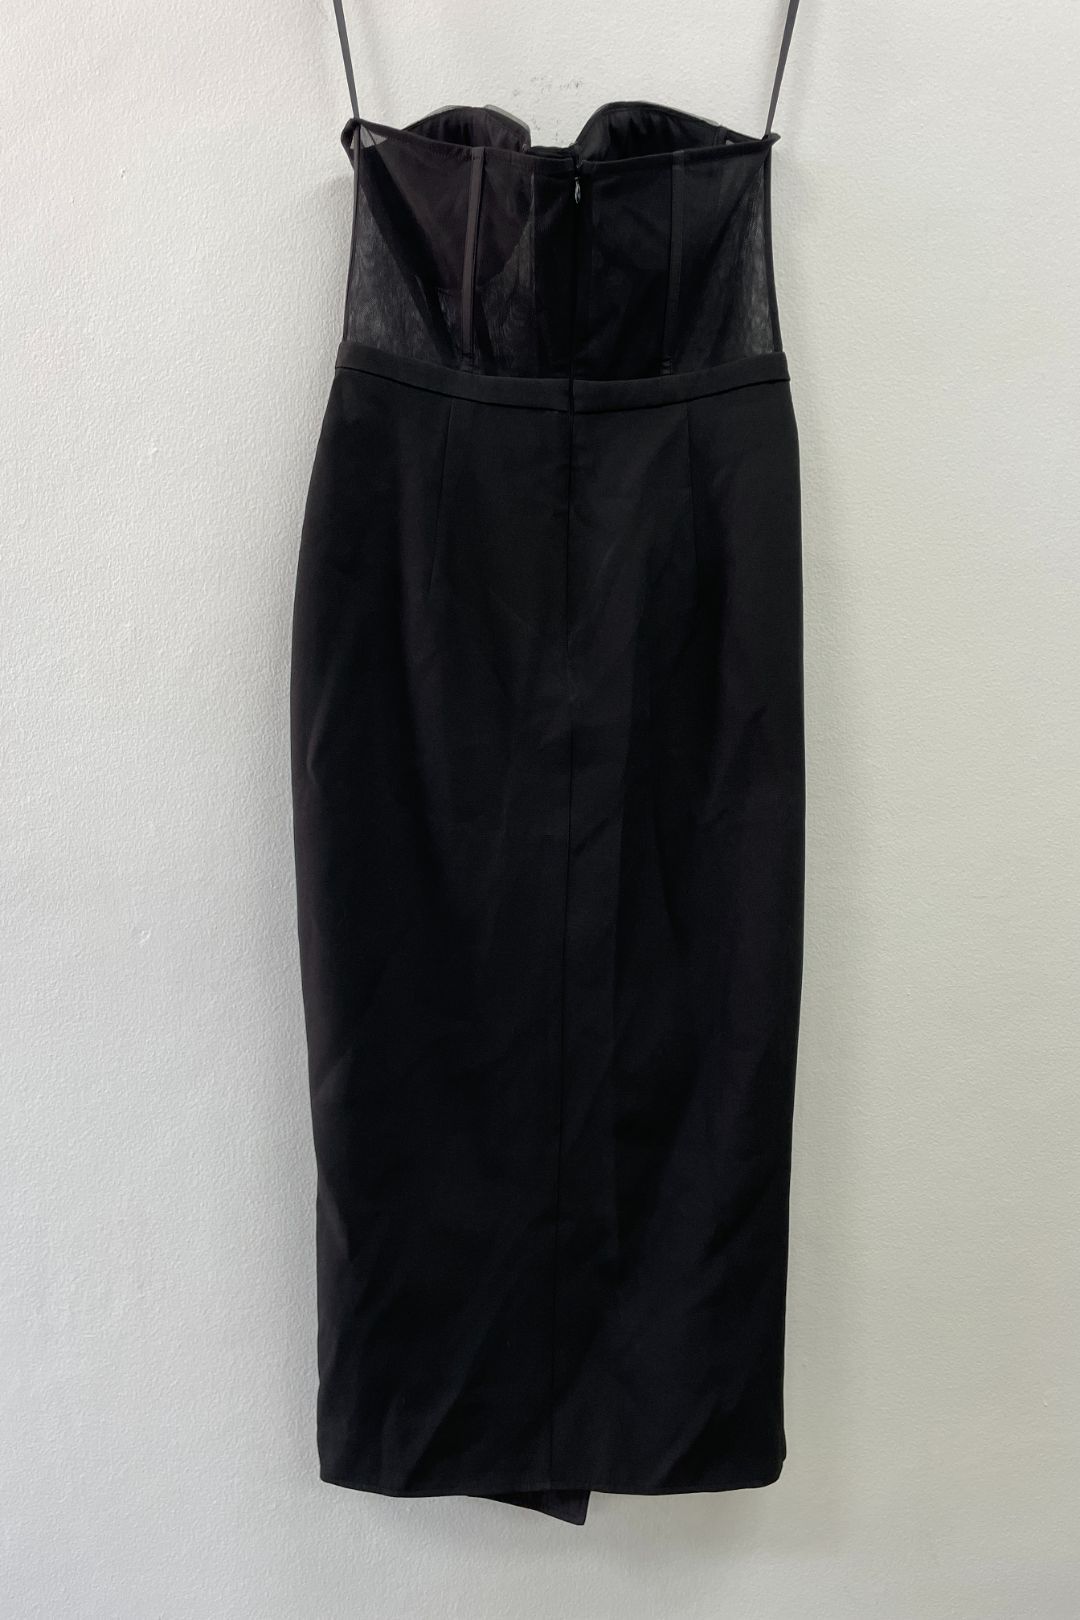 Black Strapless Bustier Midi Dress